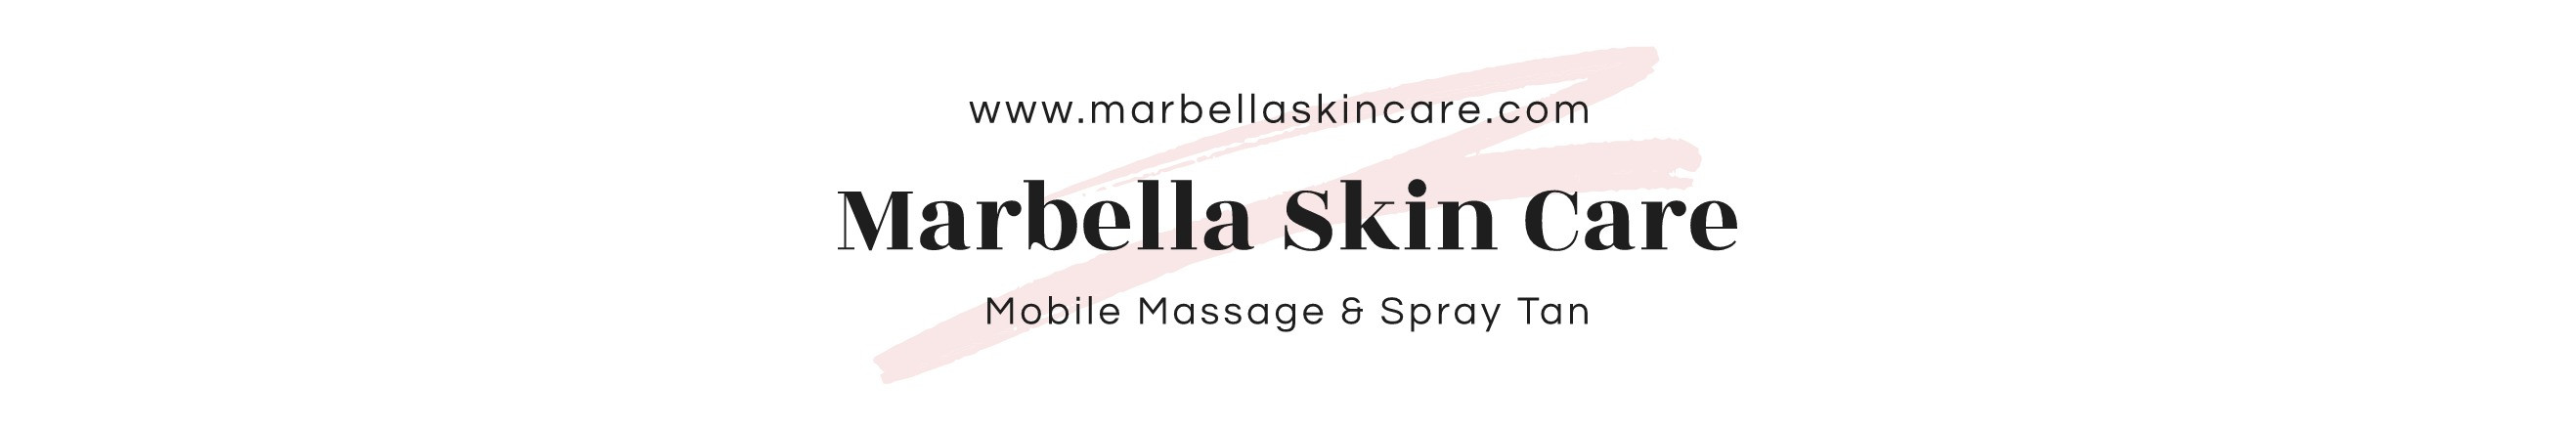 Mobile Massage Therapist & Spray Tans